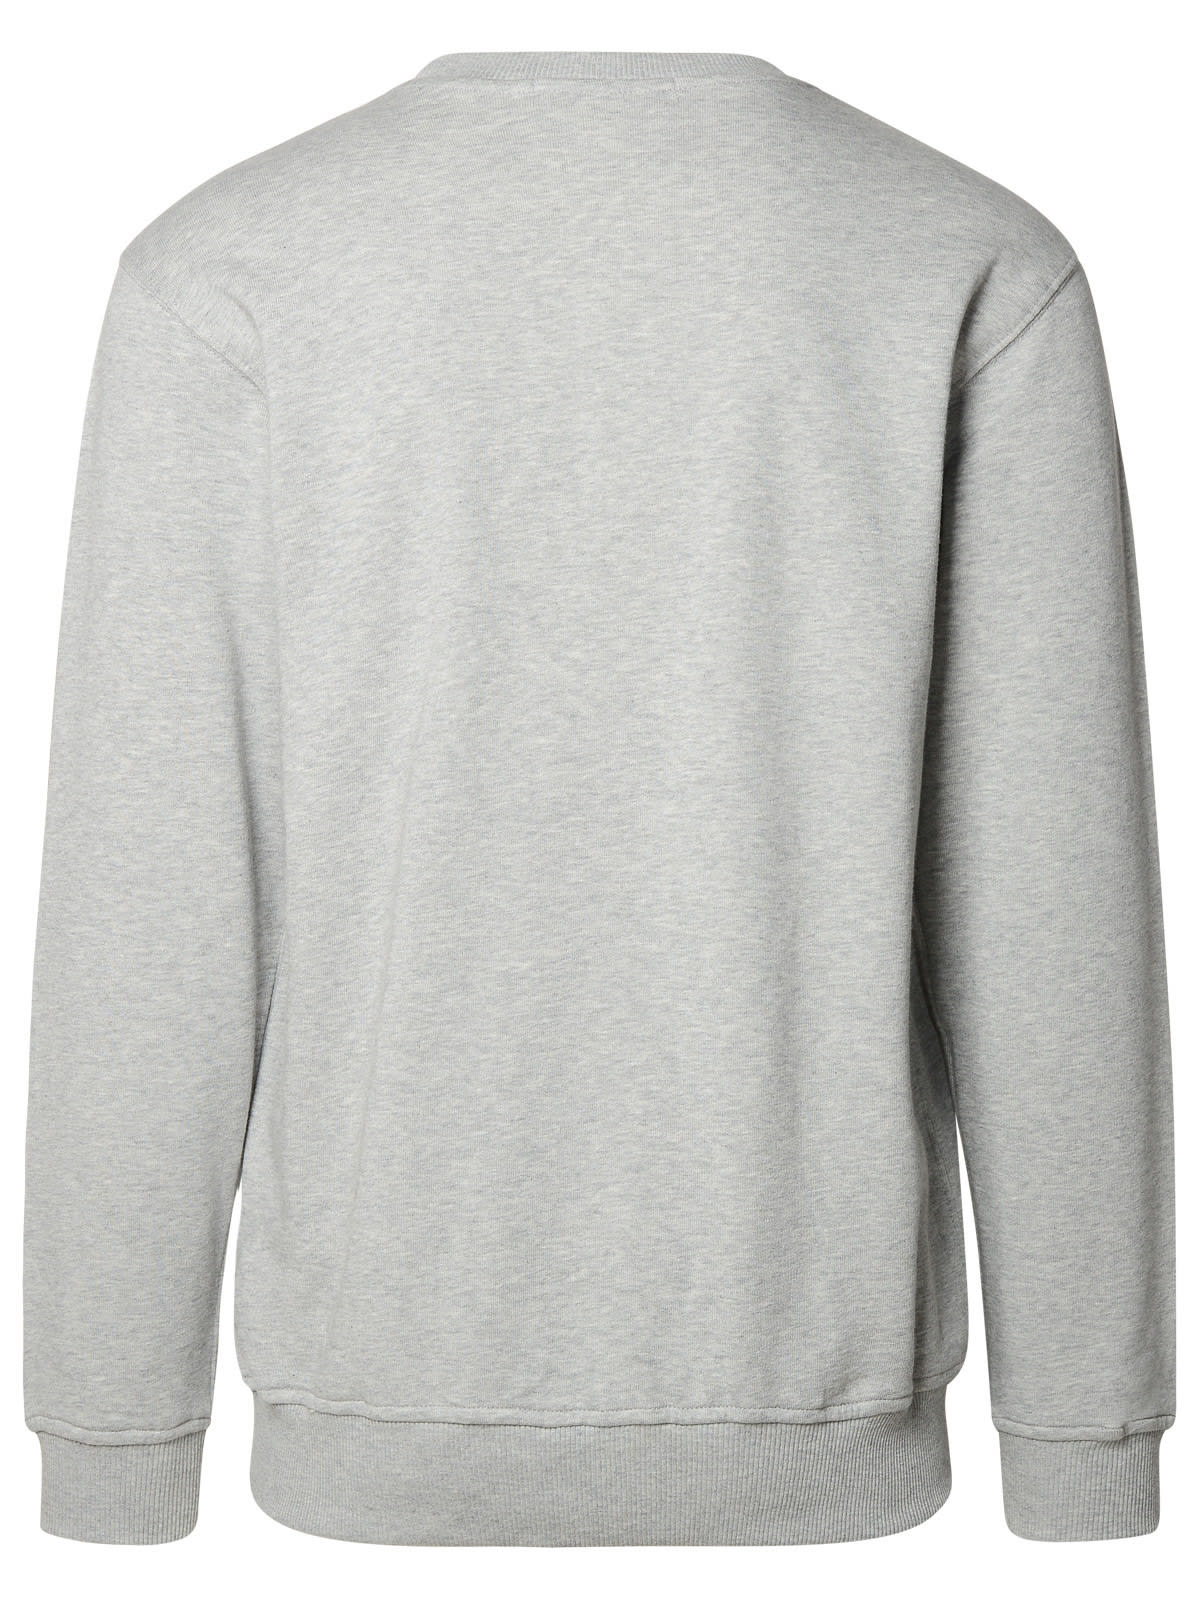 Shop Comme Des Garçons Shirt Marilyn Monroe Grey Cotton Sweatshirt